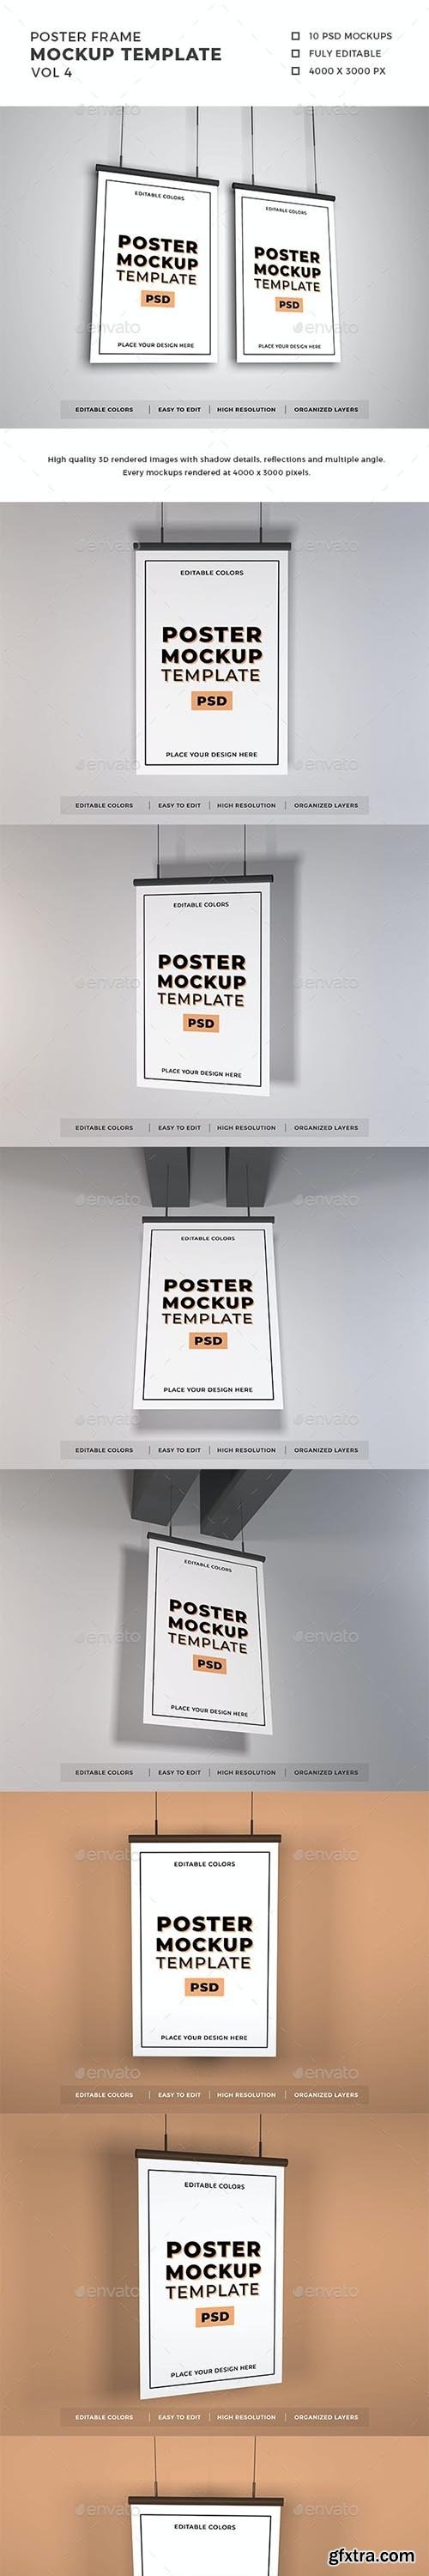 GraphicRiver - Poster Frame Mockup Template Vol 4 29354920